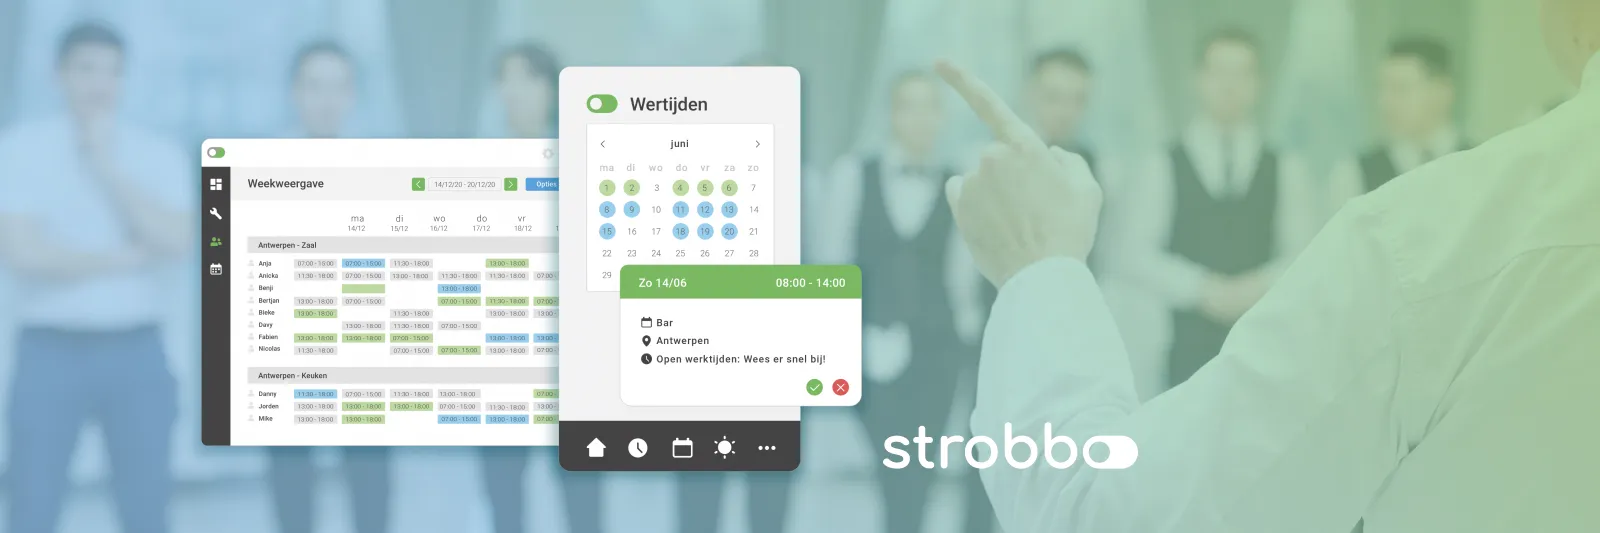 Strobbo_platform development